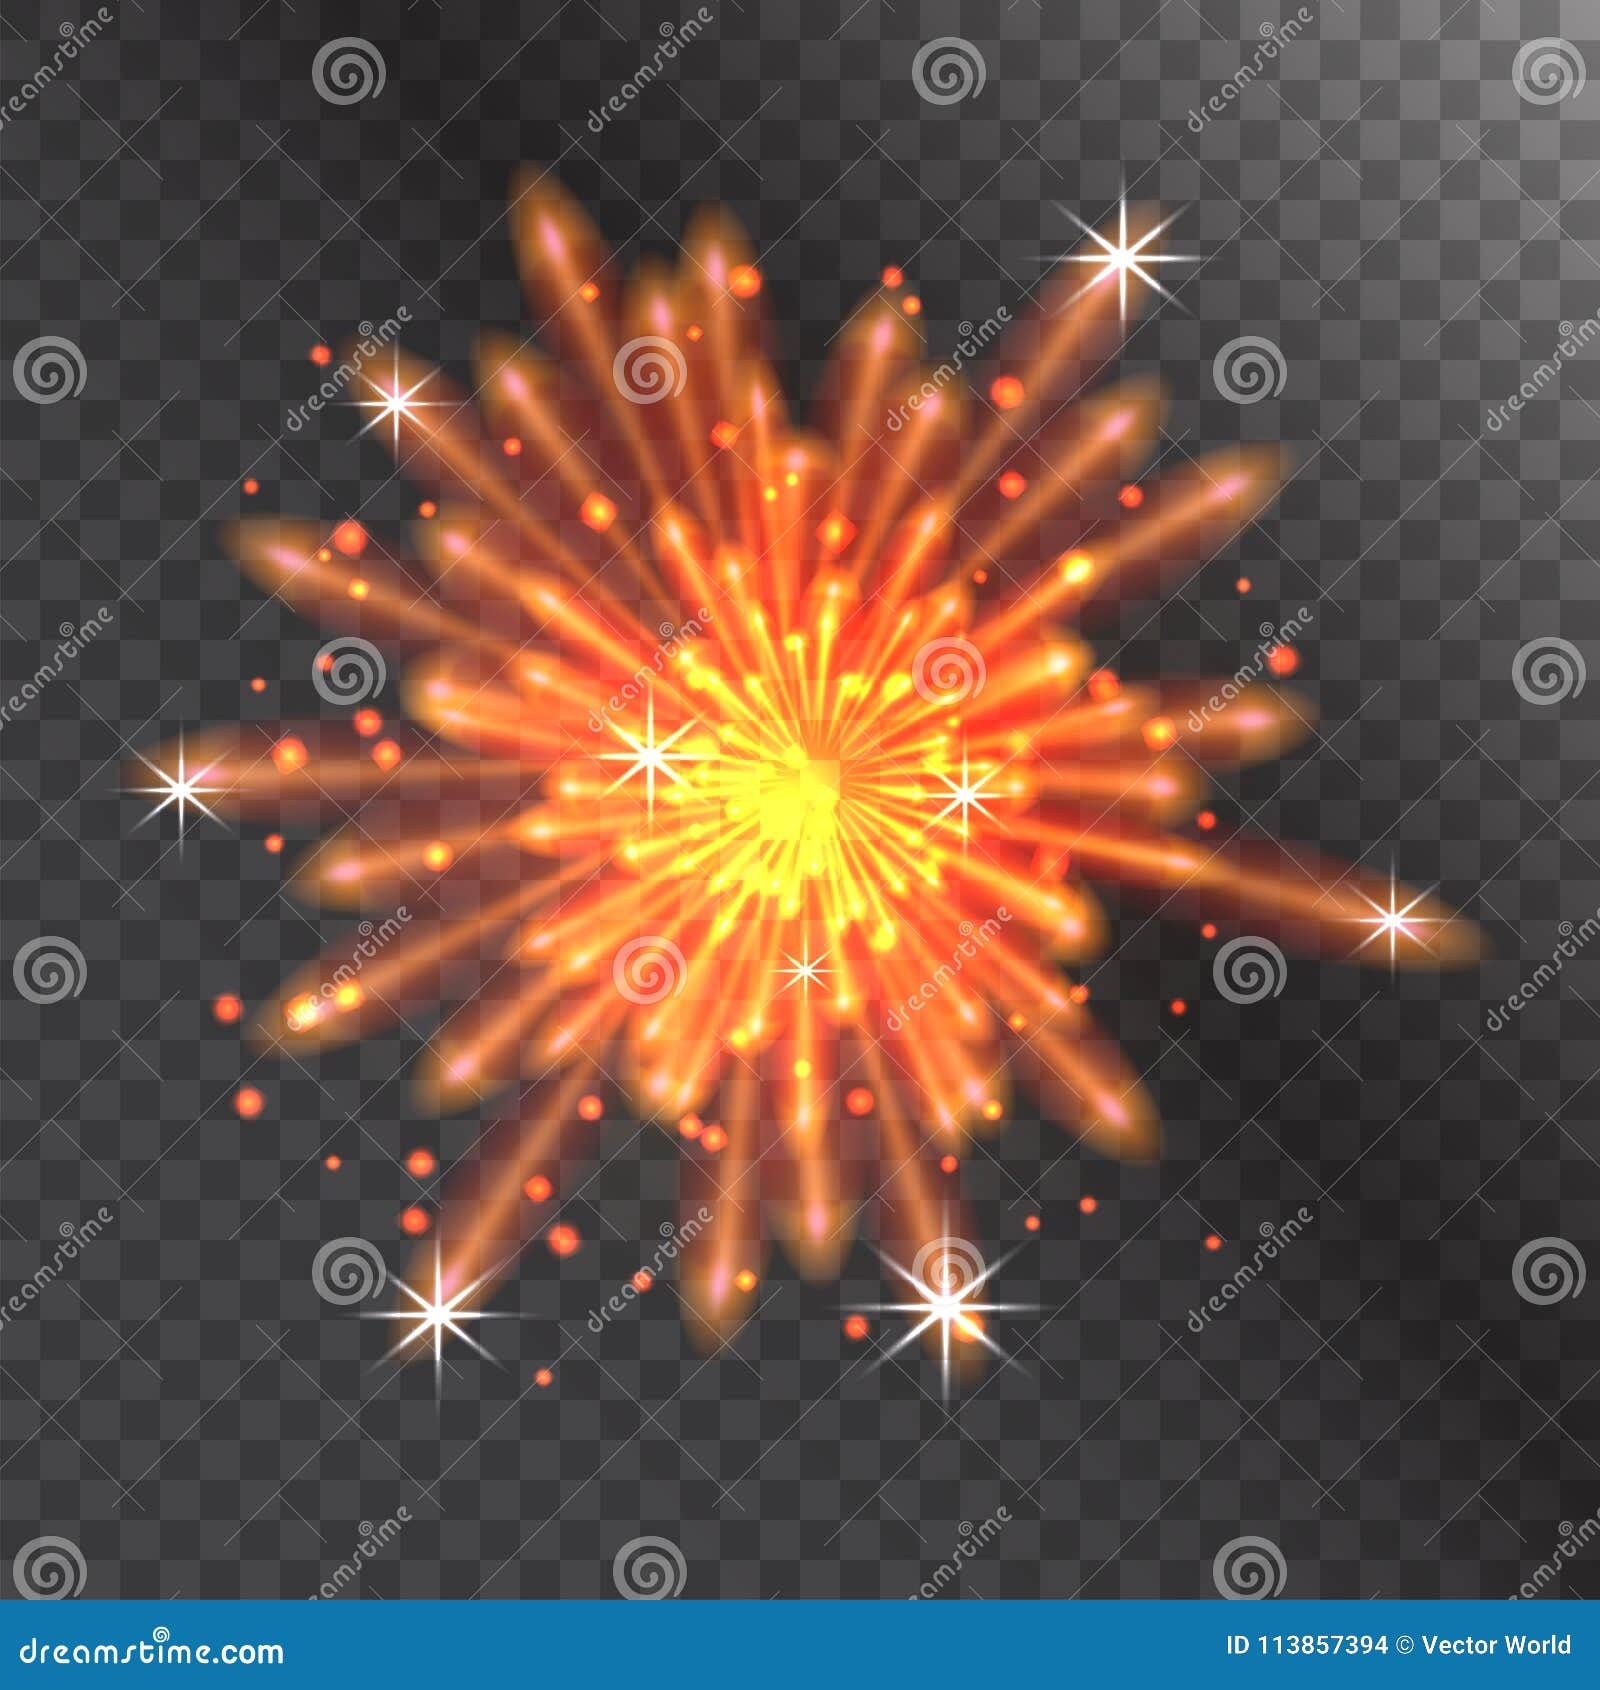 Firework Vector Illustration Celebration Holiday Event Night Explosion